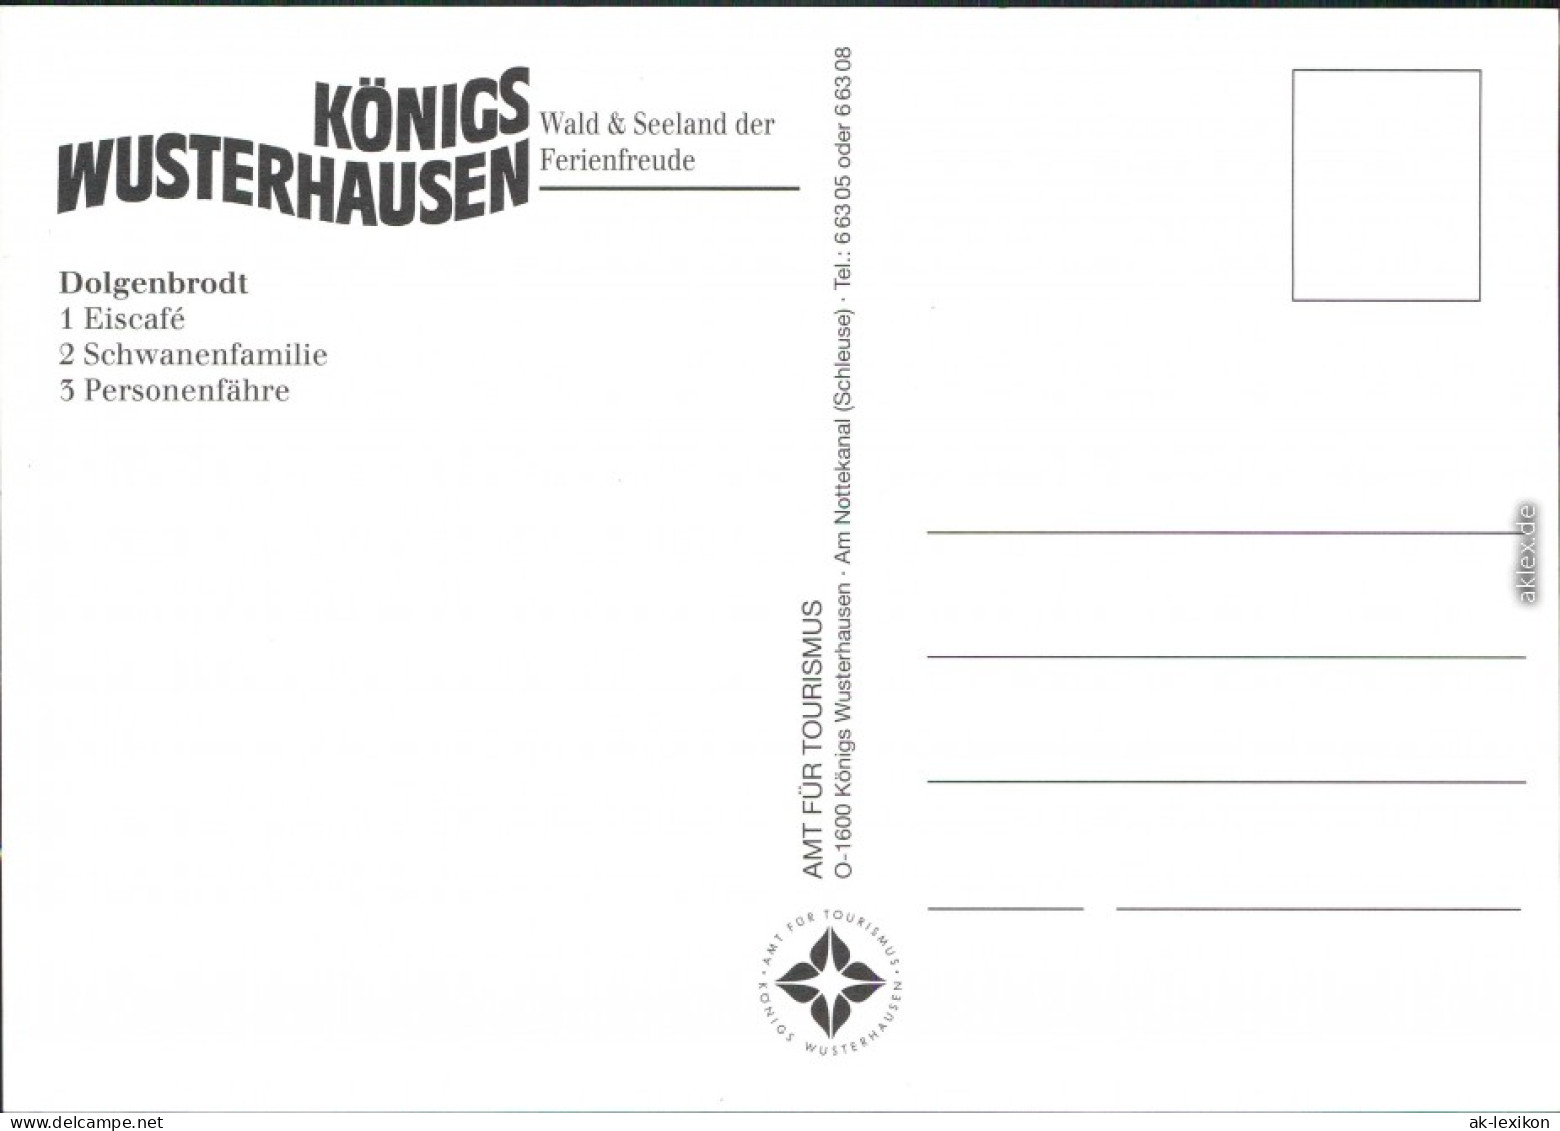 Königs Wusterhausen Dolgenbrodt Eiscafé, Schwanenfamilie, Personenfähre 1995 - Königs-Wusterhausen